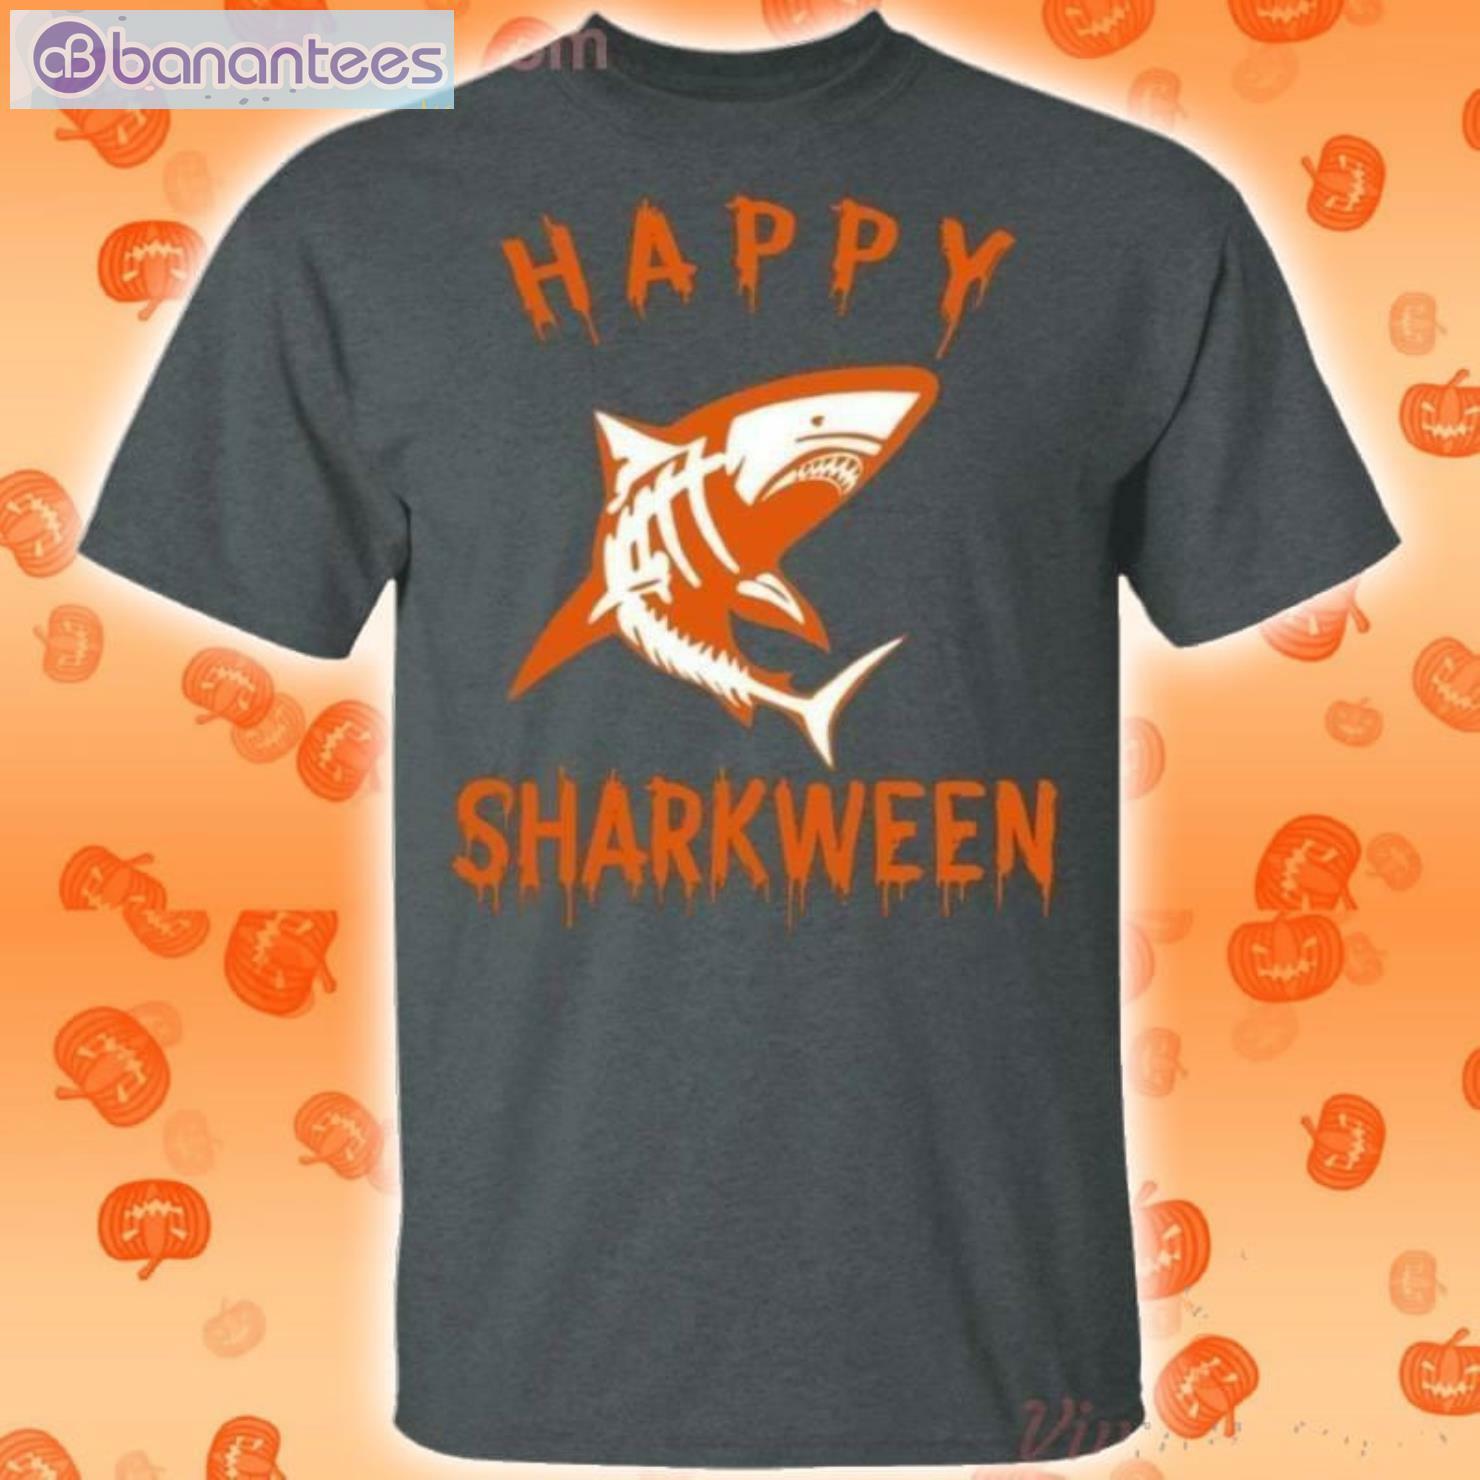 Happy Sharkween Halloween Funny T-Shirt Product Photo 2 Product photo 2